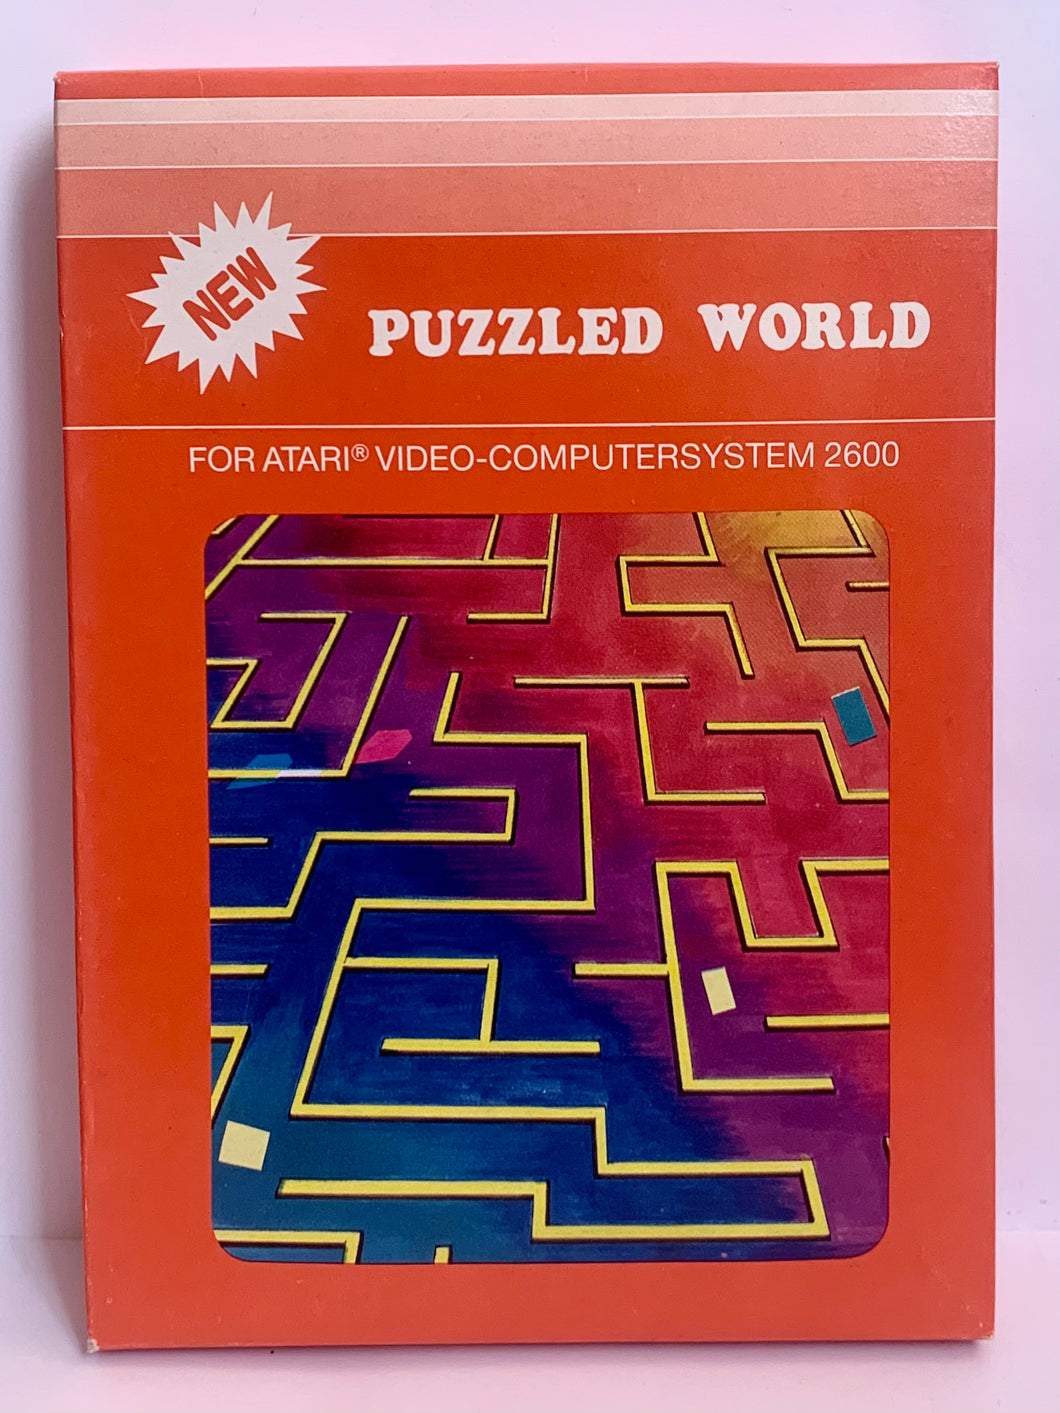 Puzzle World - Atari VCS 2600 - NTSC - CIB